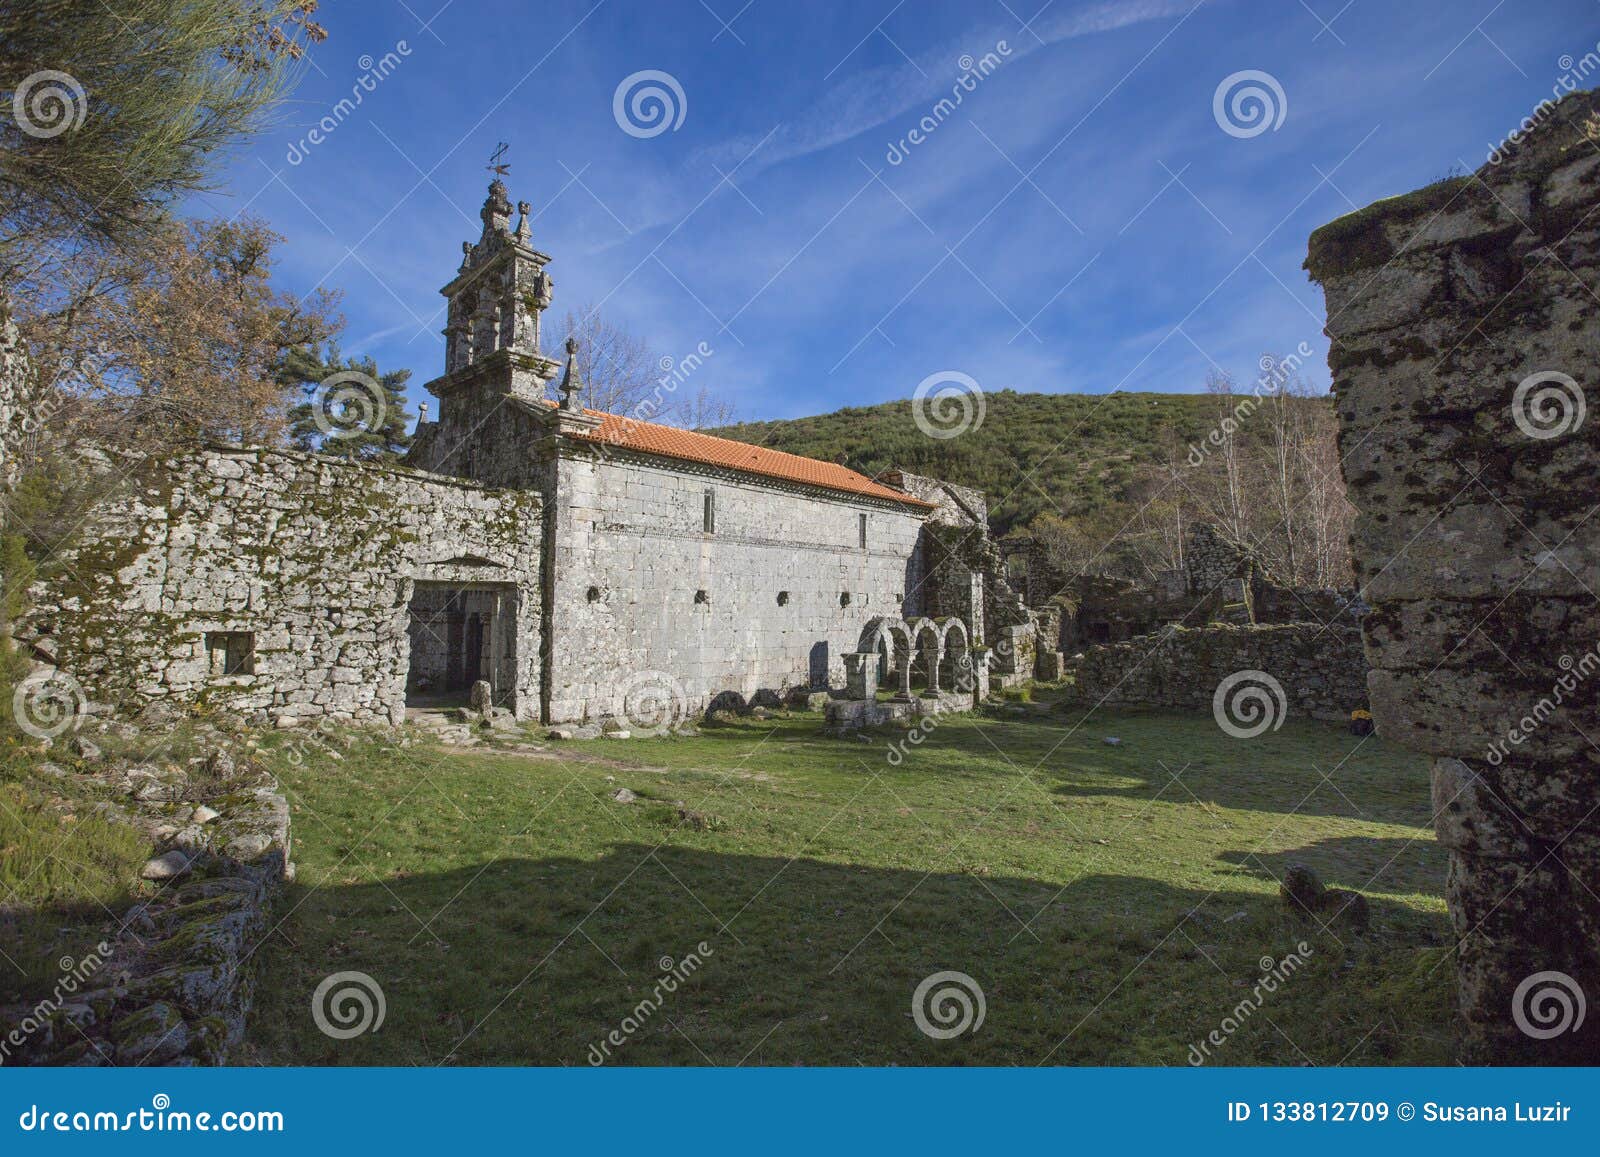 ruined monastery of pitoes das junias, municipality of montalegre. peneda gerÃÂªs national park. portugal.